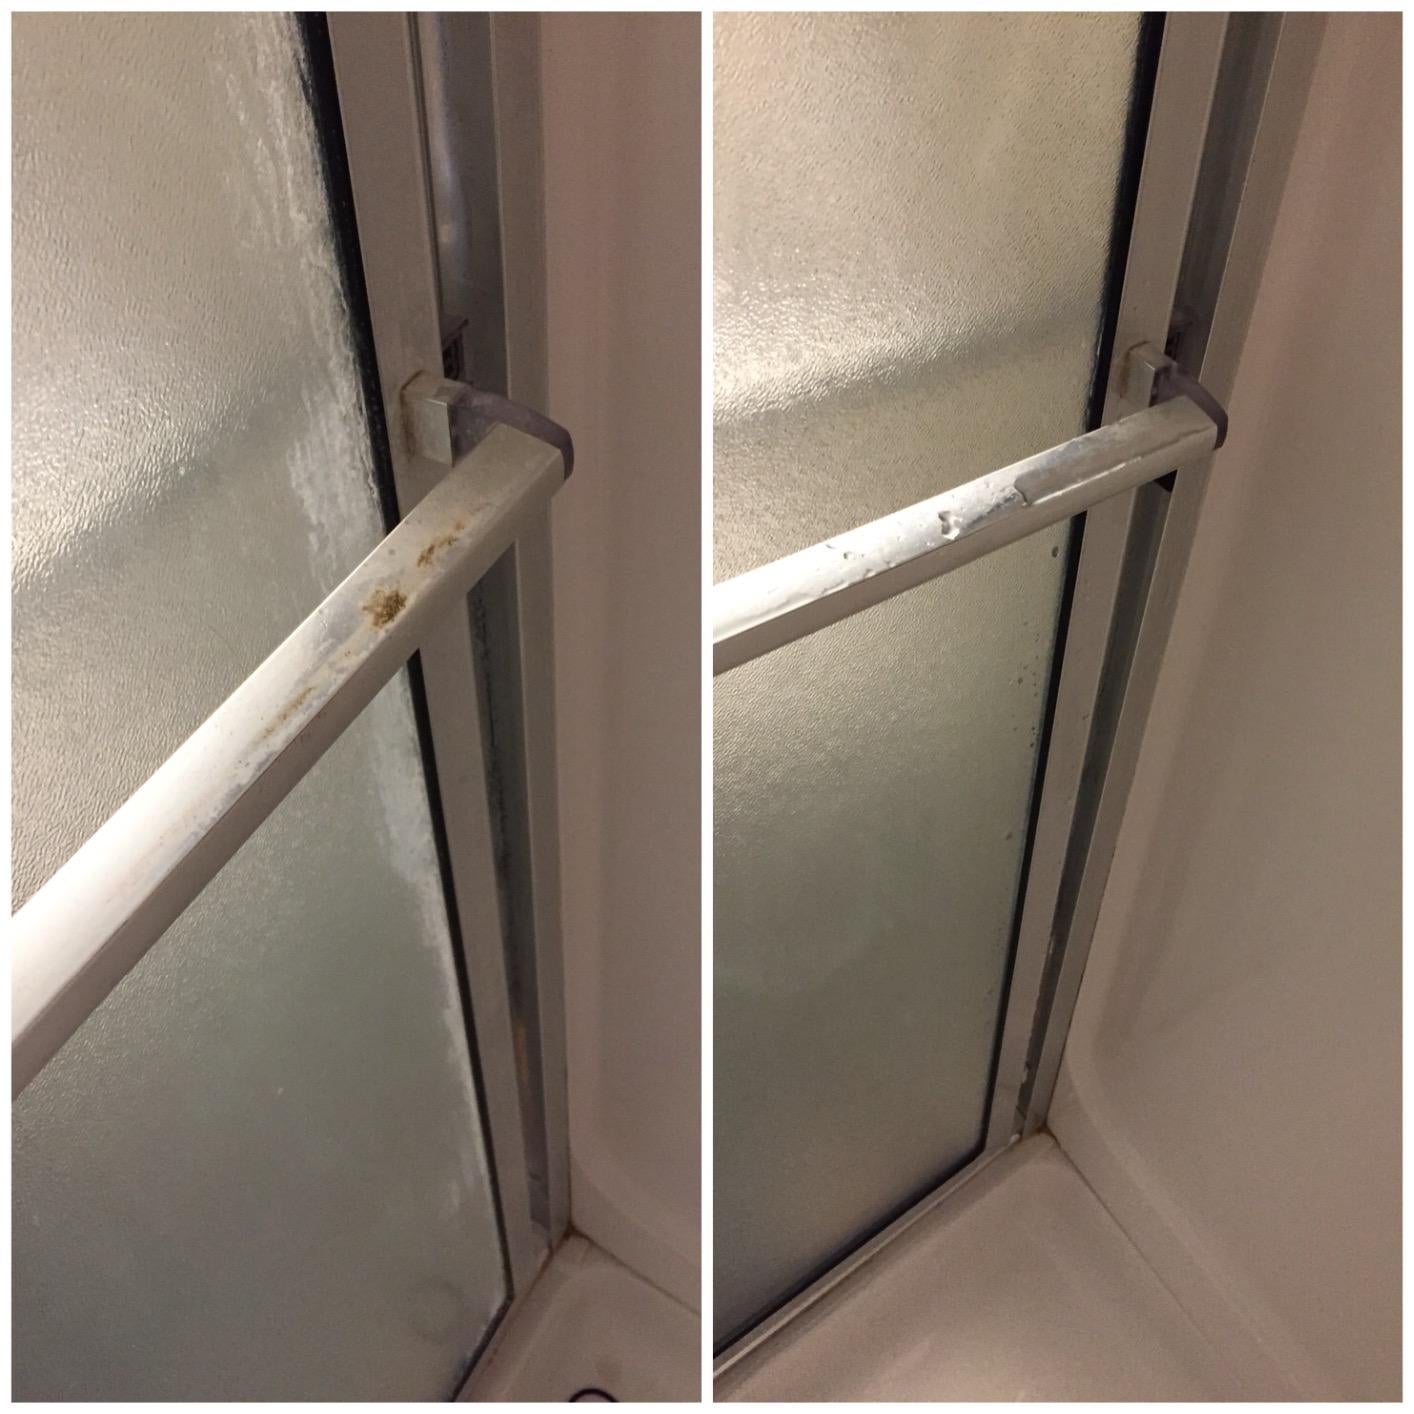 Shower door before and after using eraser sponge to clean rust spots